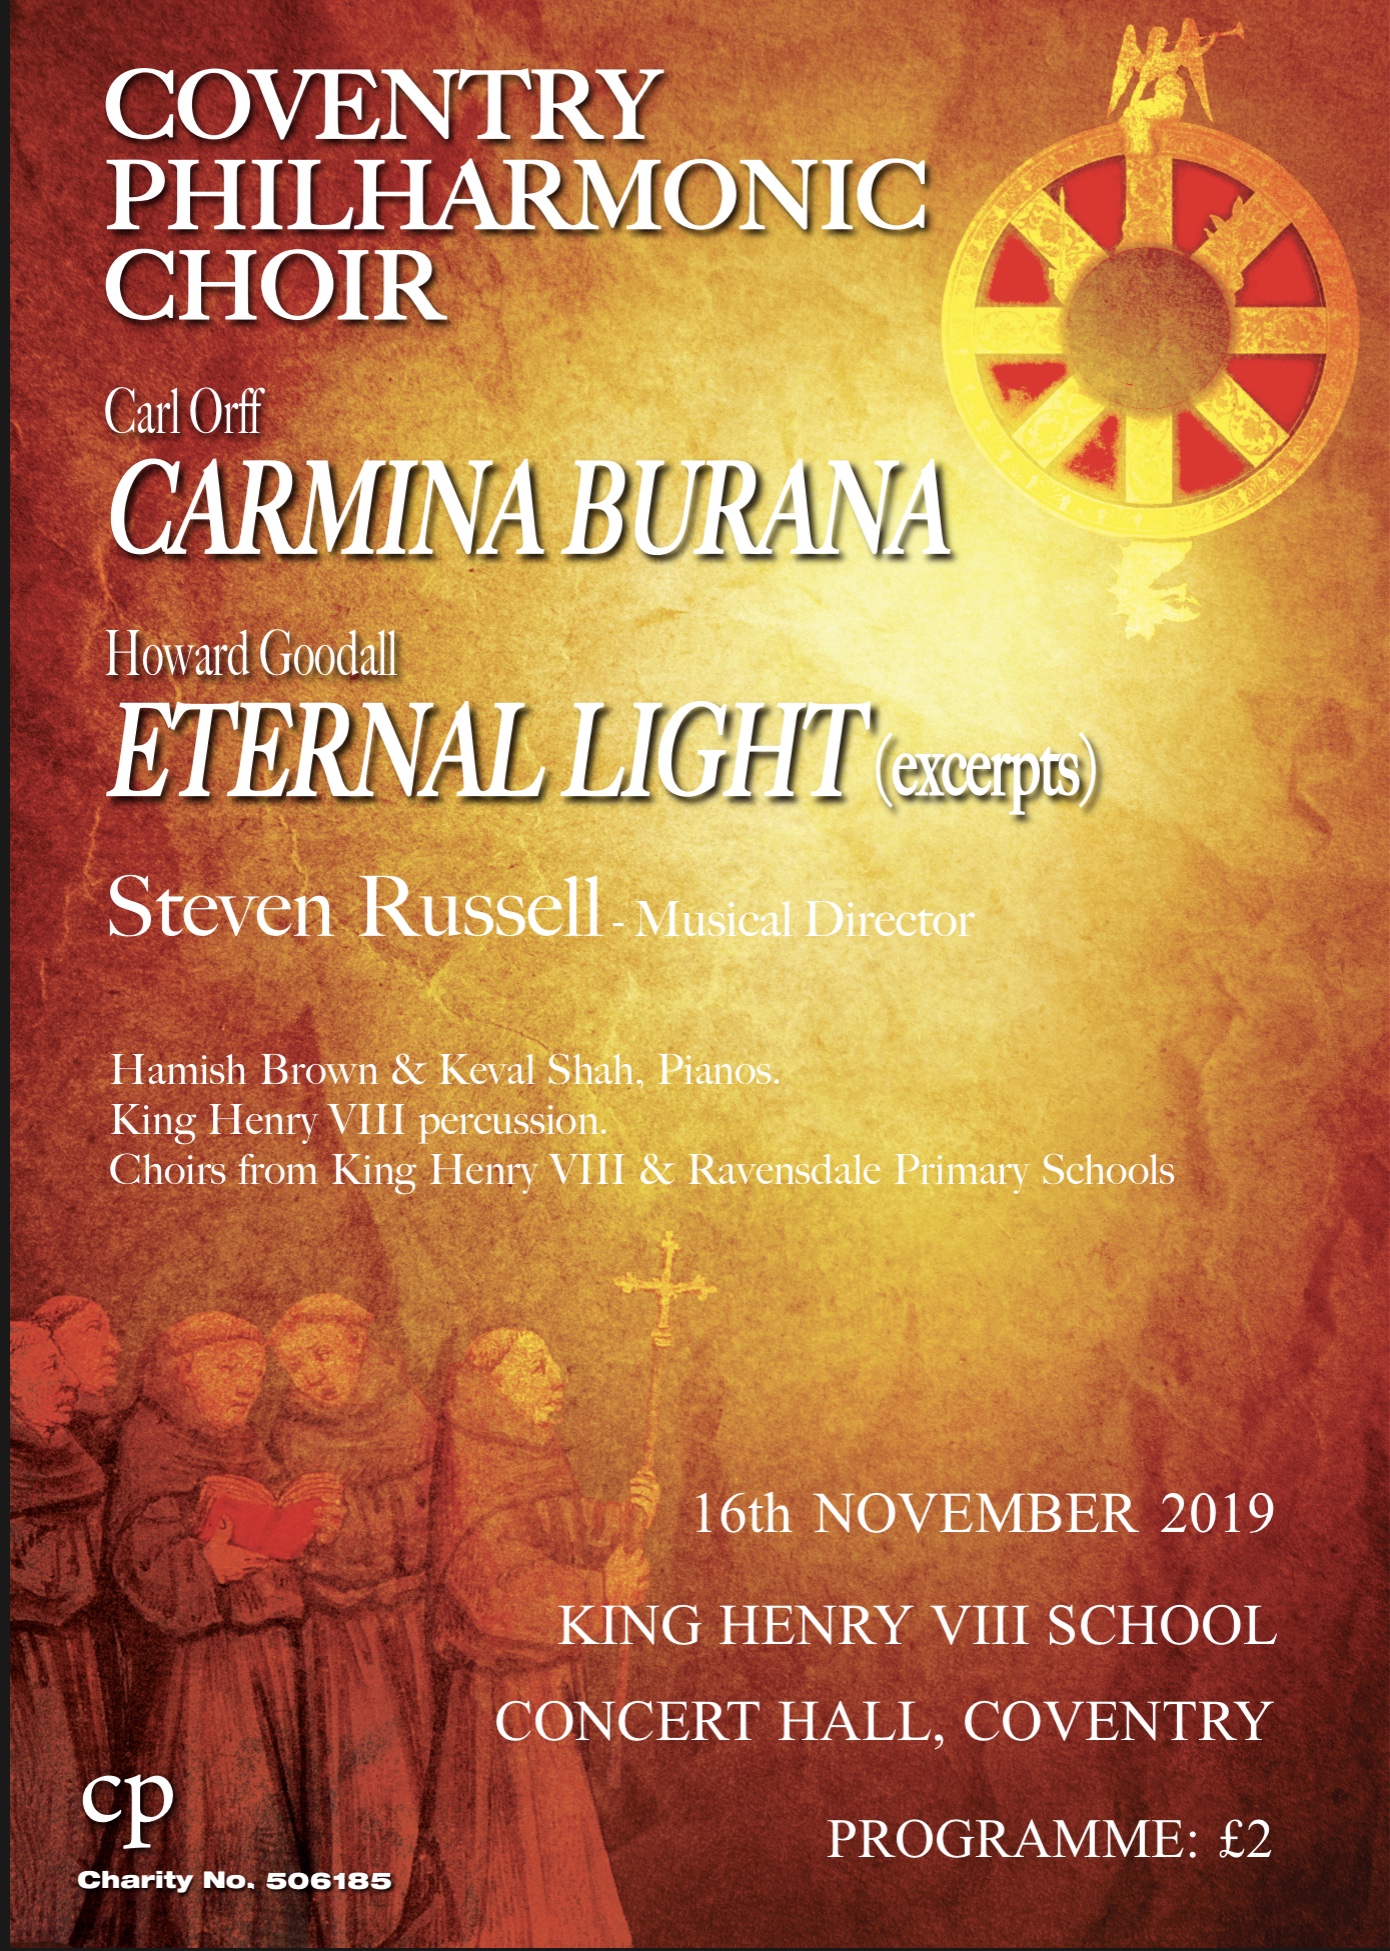 Carl Orff's Carmina Burana / Excerpts from Howard Goodall’s Eternal Light